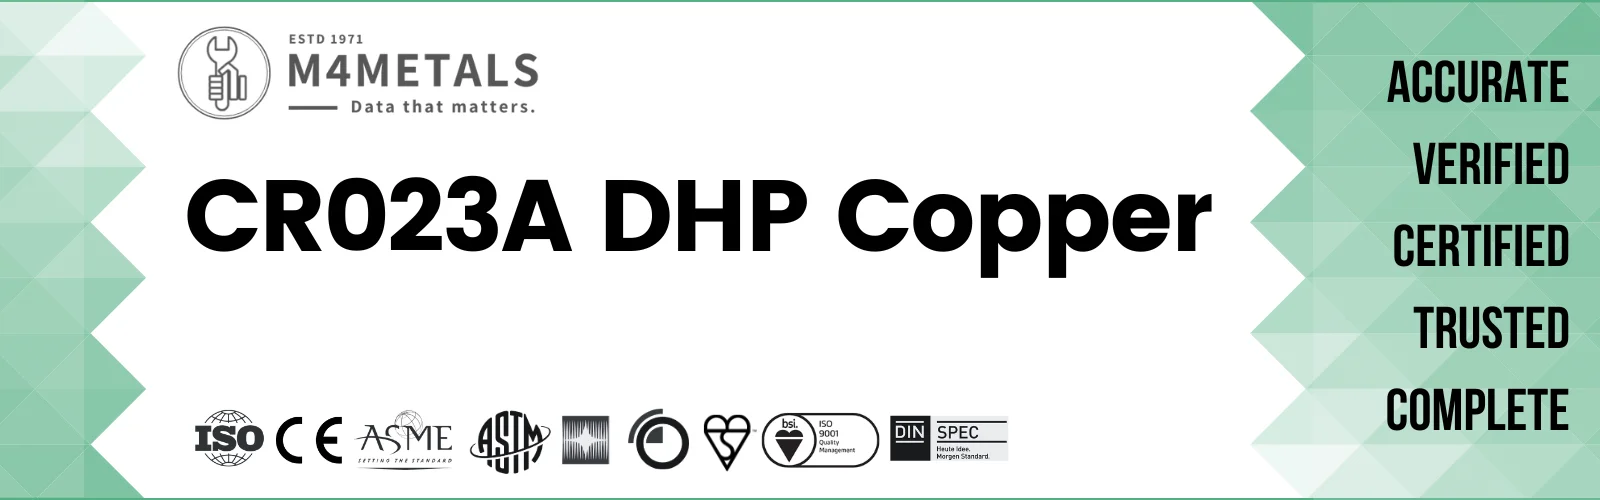 CR023A DHP Copper